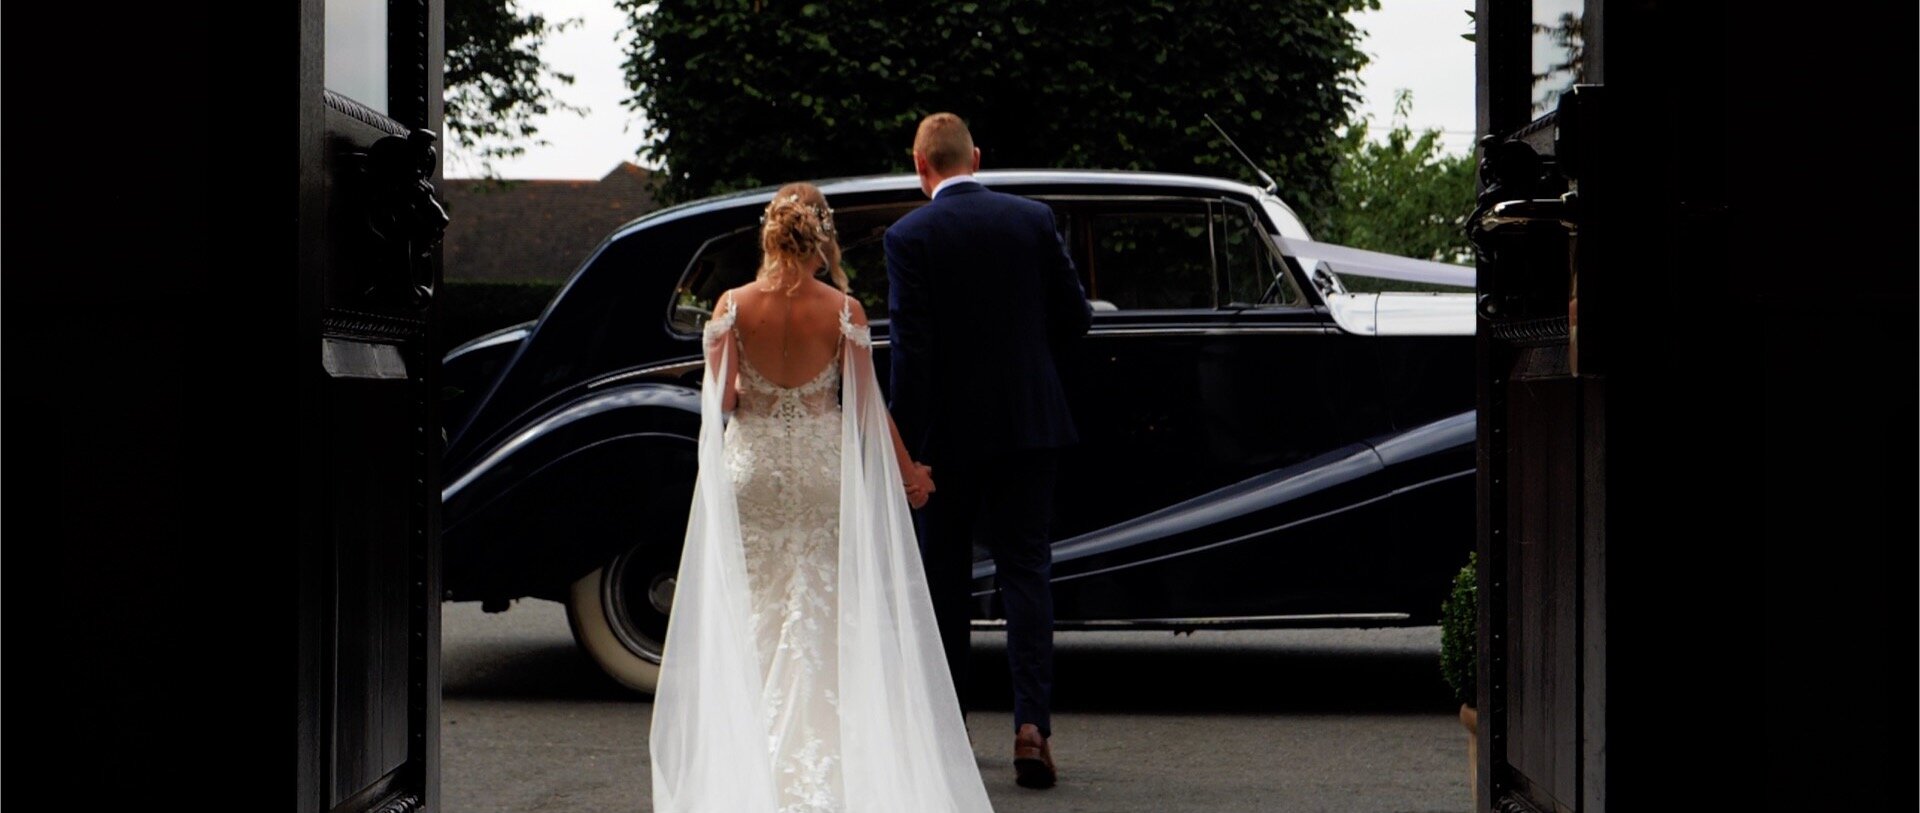 Rolls Royce wedding videos Essex.jpg